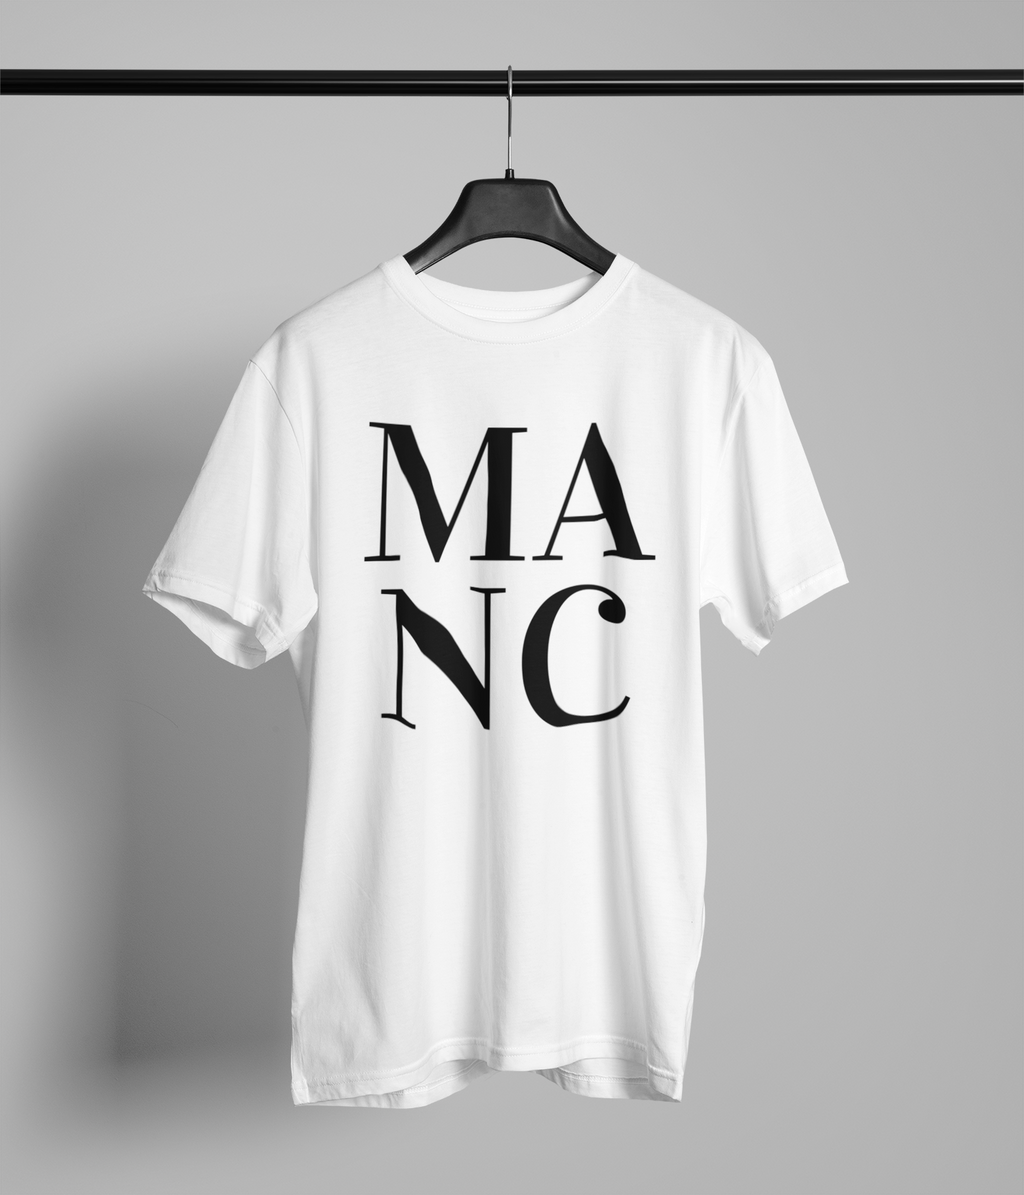 MANC Northern Slang Manchester T-Shirt Unisex